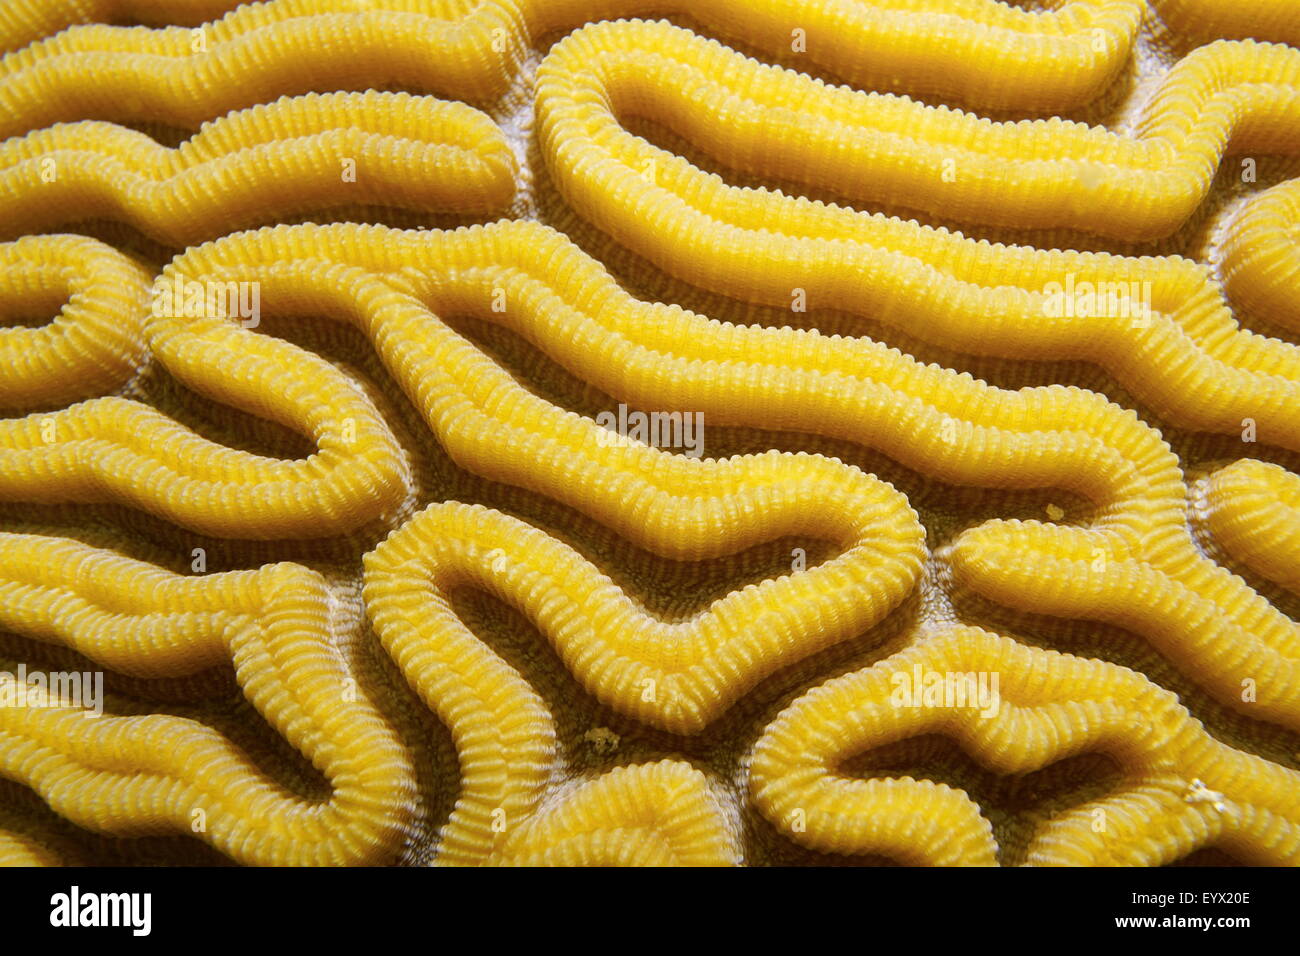 Marine life underwater, close up image of grooved brain coral, Diploria labyrinthiformis, Caribbean sea Stock Photo